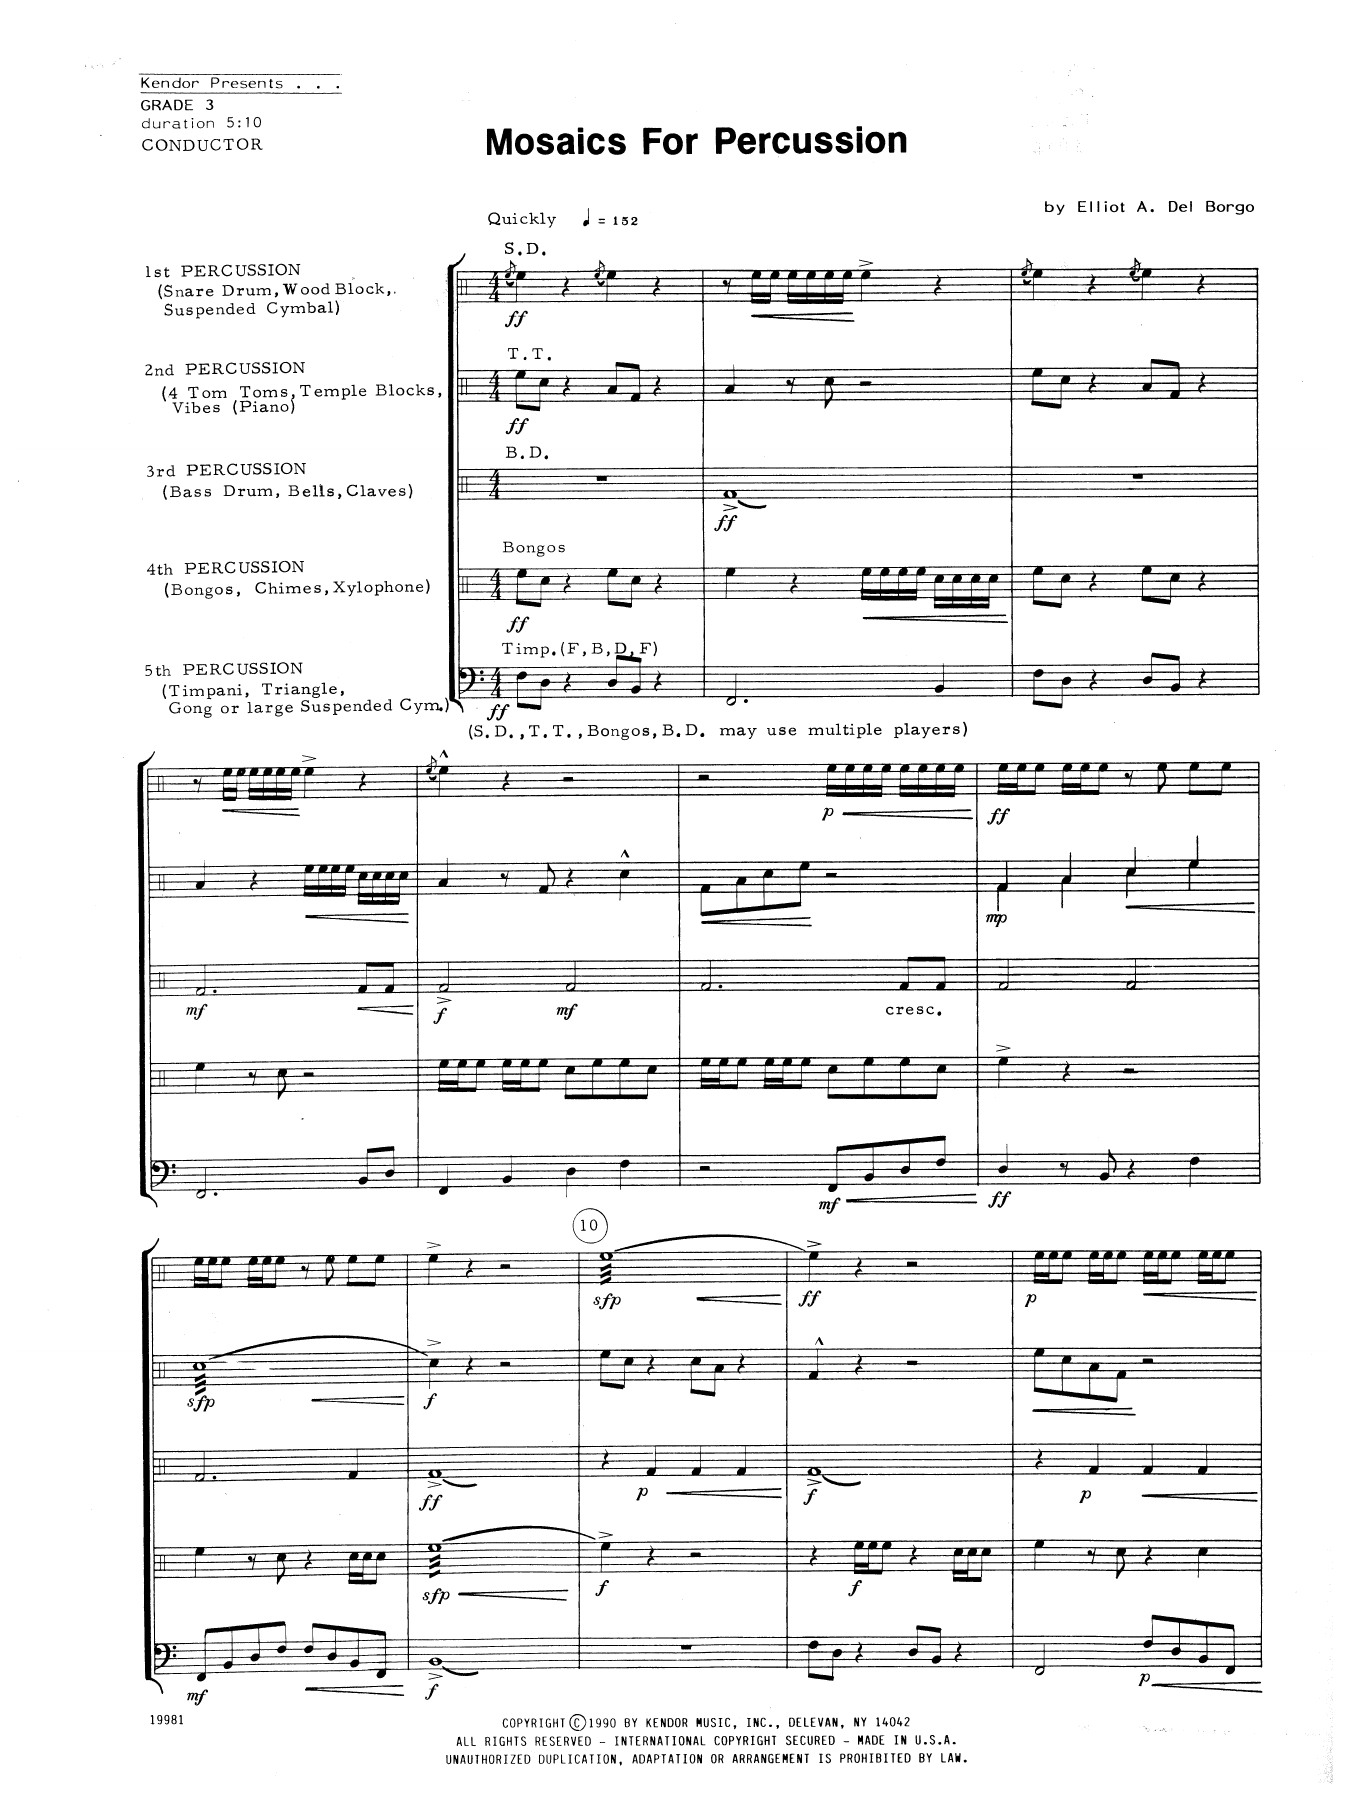 Download Elliot A. Del Borgo Mosaics For Percussion - Full Score Sheet Music